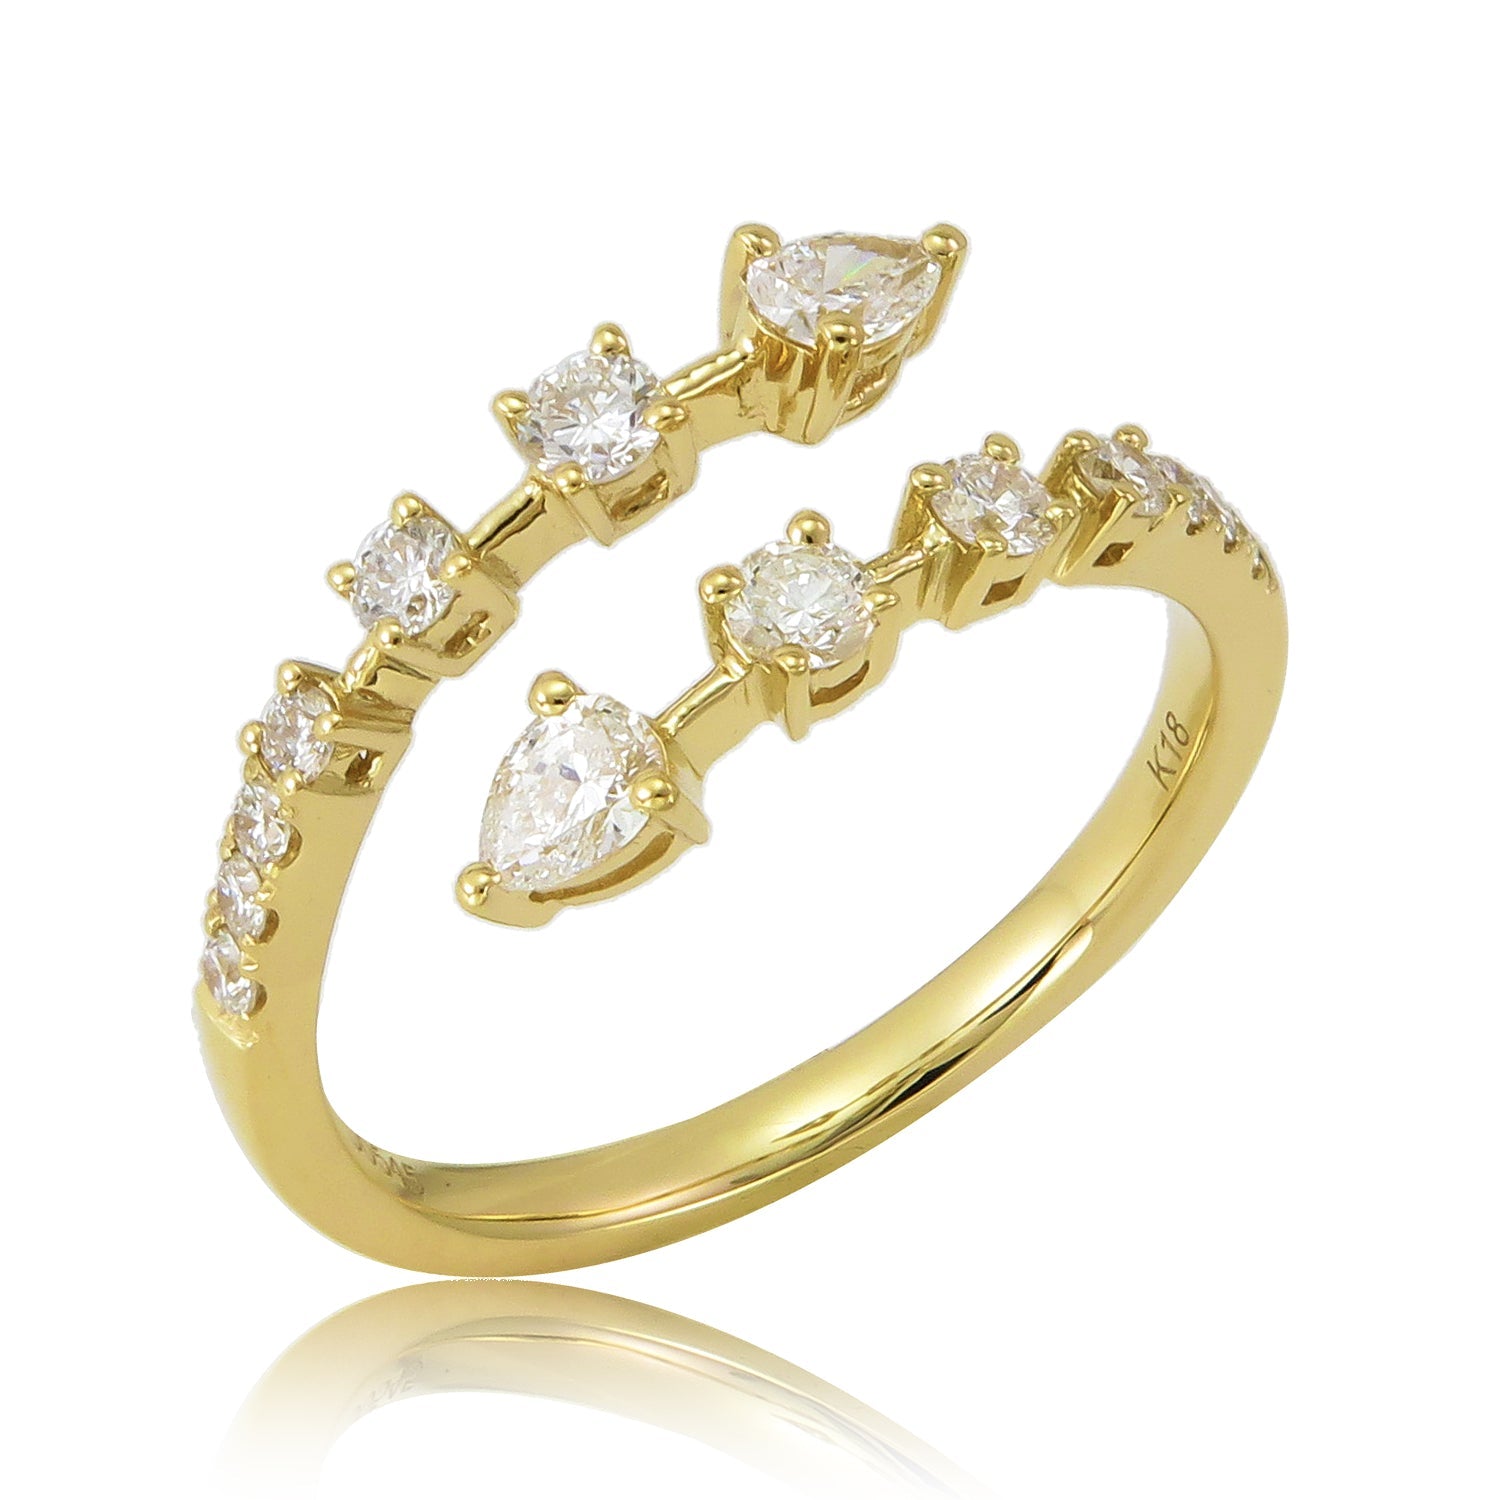 ROSE GOLD ROUND SHAPE DIAMOND SEMI-MOUNT ENGAGEMENT RING - Nelson's Jewelers